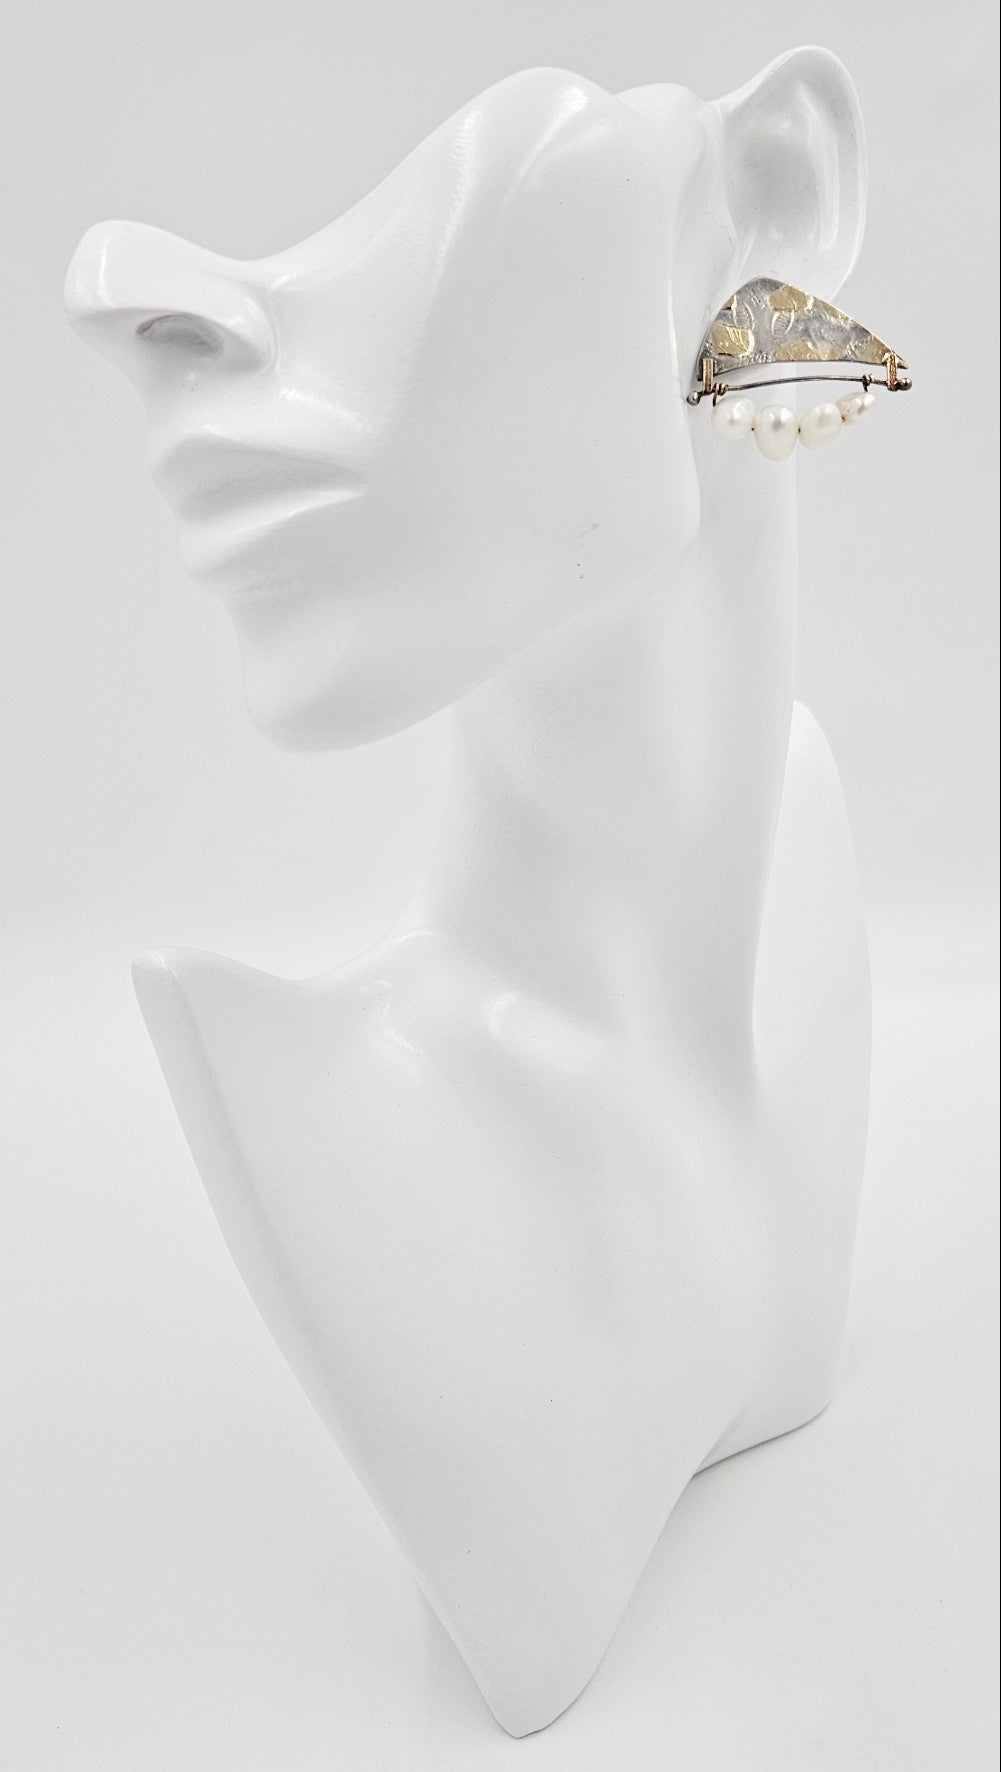 Vintage Artisan Signed Sterling 14K Gold Pearl Modernist Abstract 3D Earrings